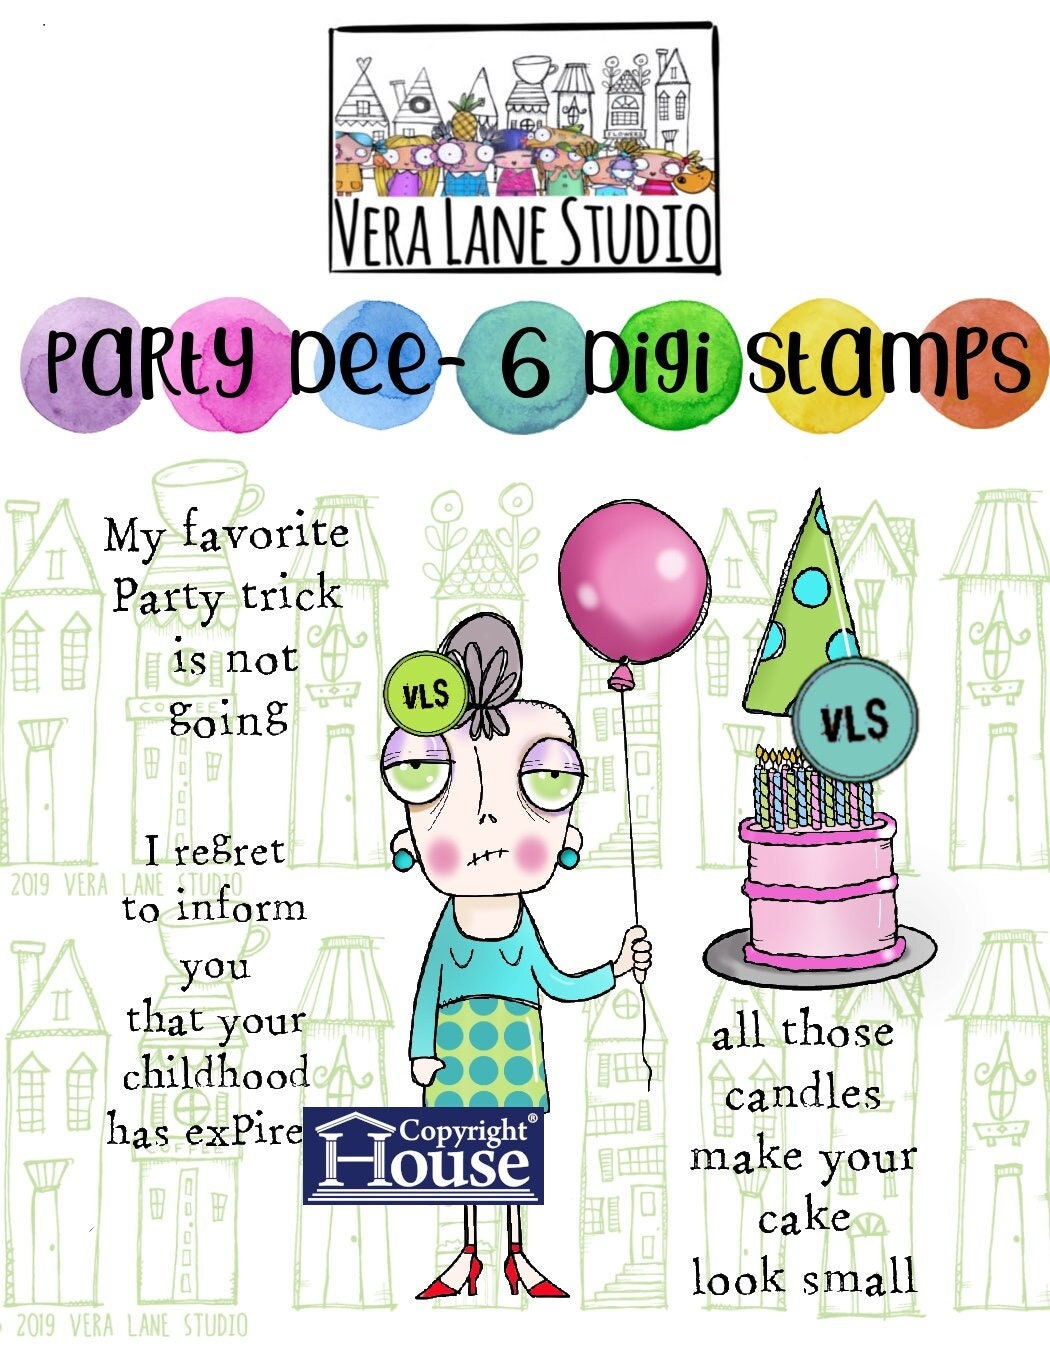 Party Dee - 6 Digi stamp bundle